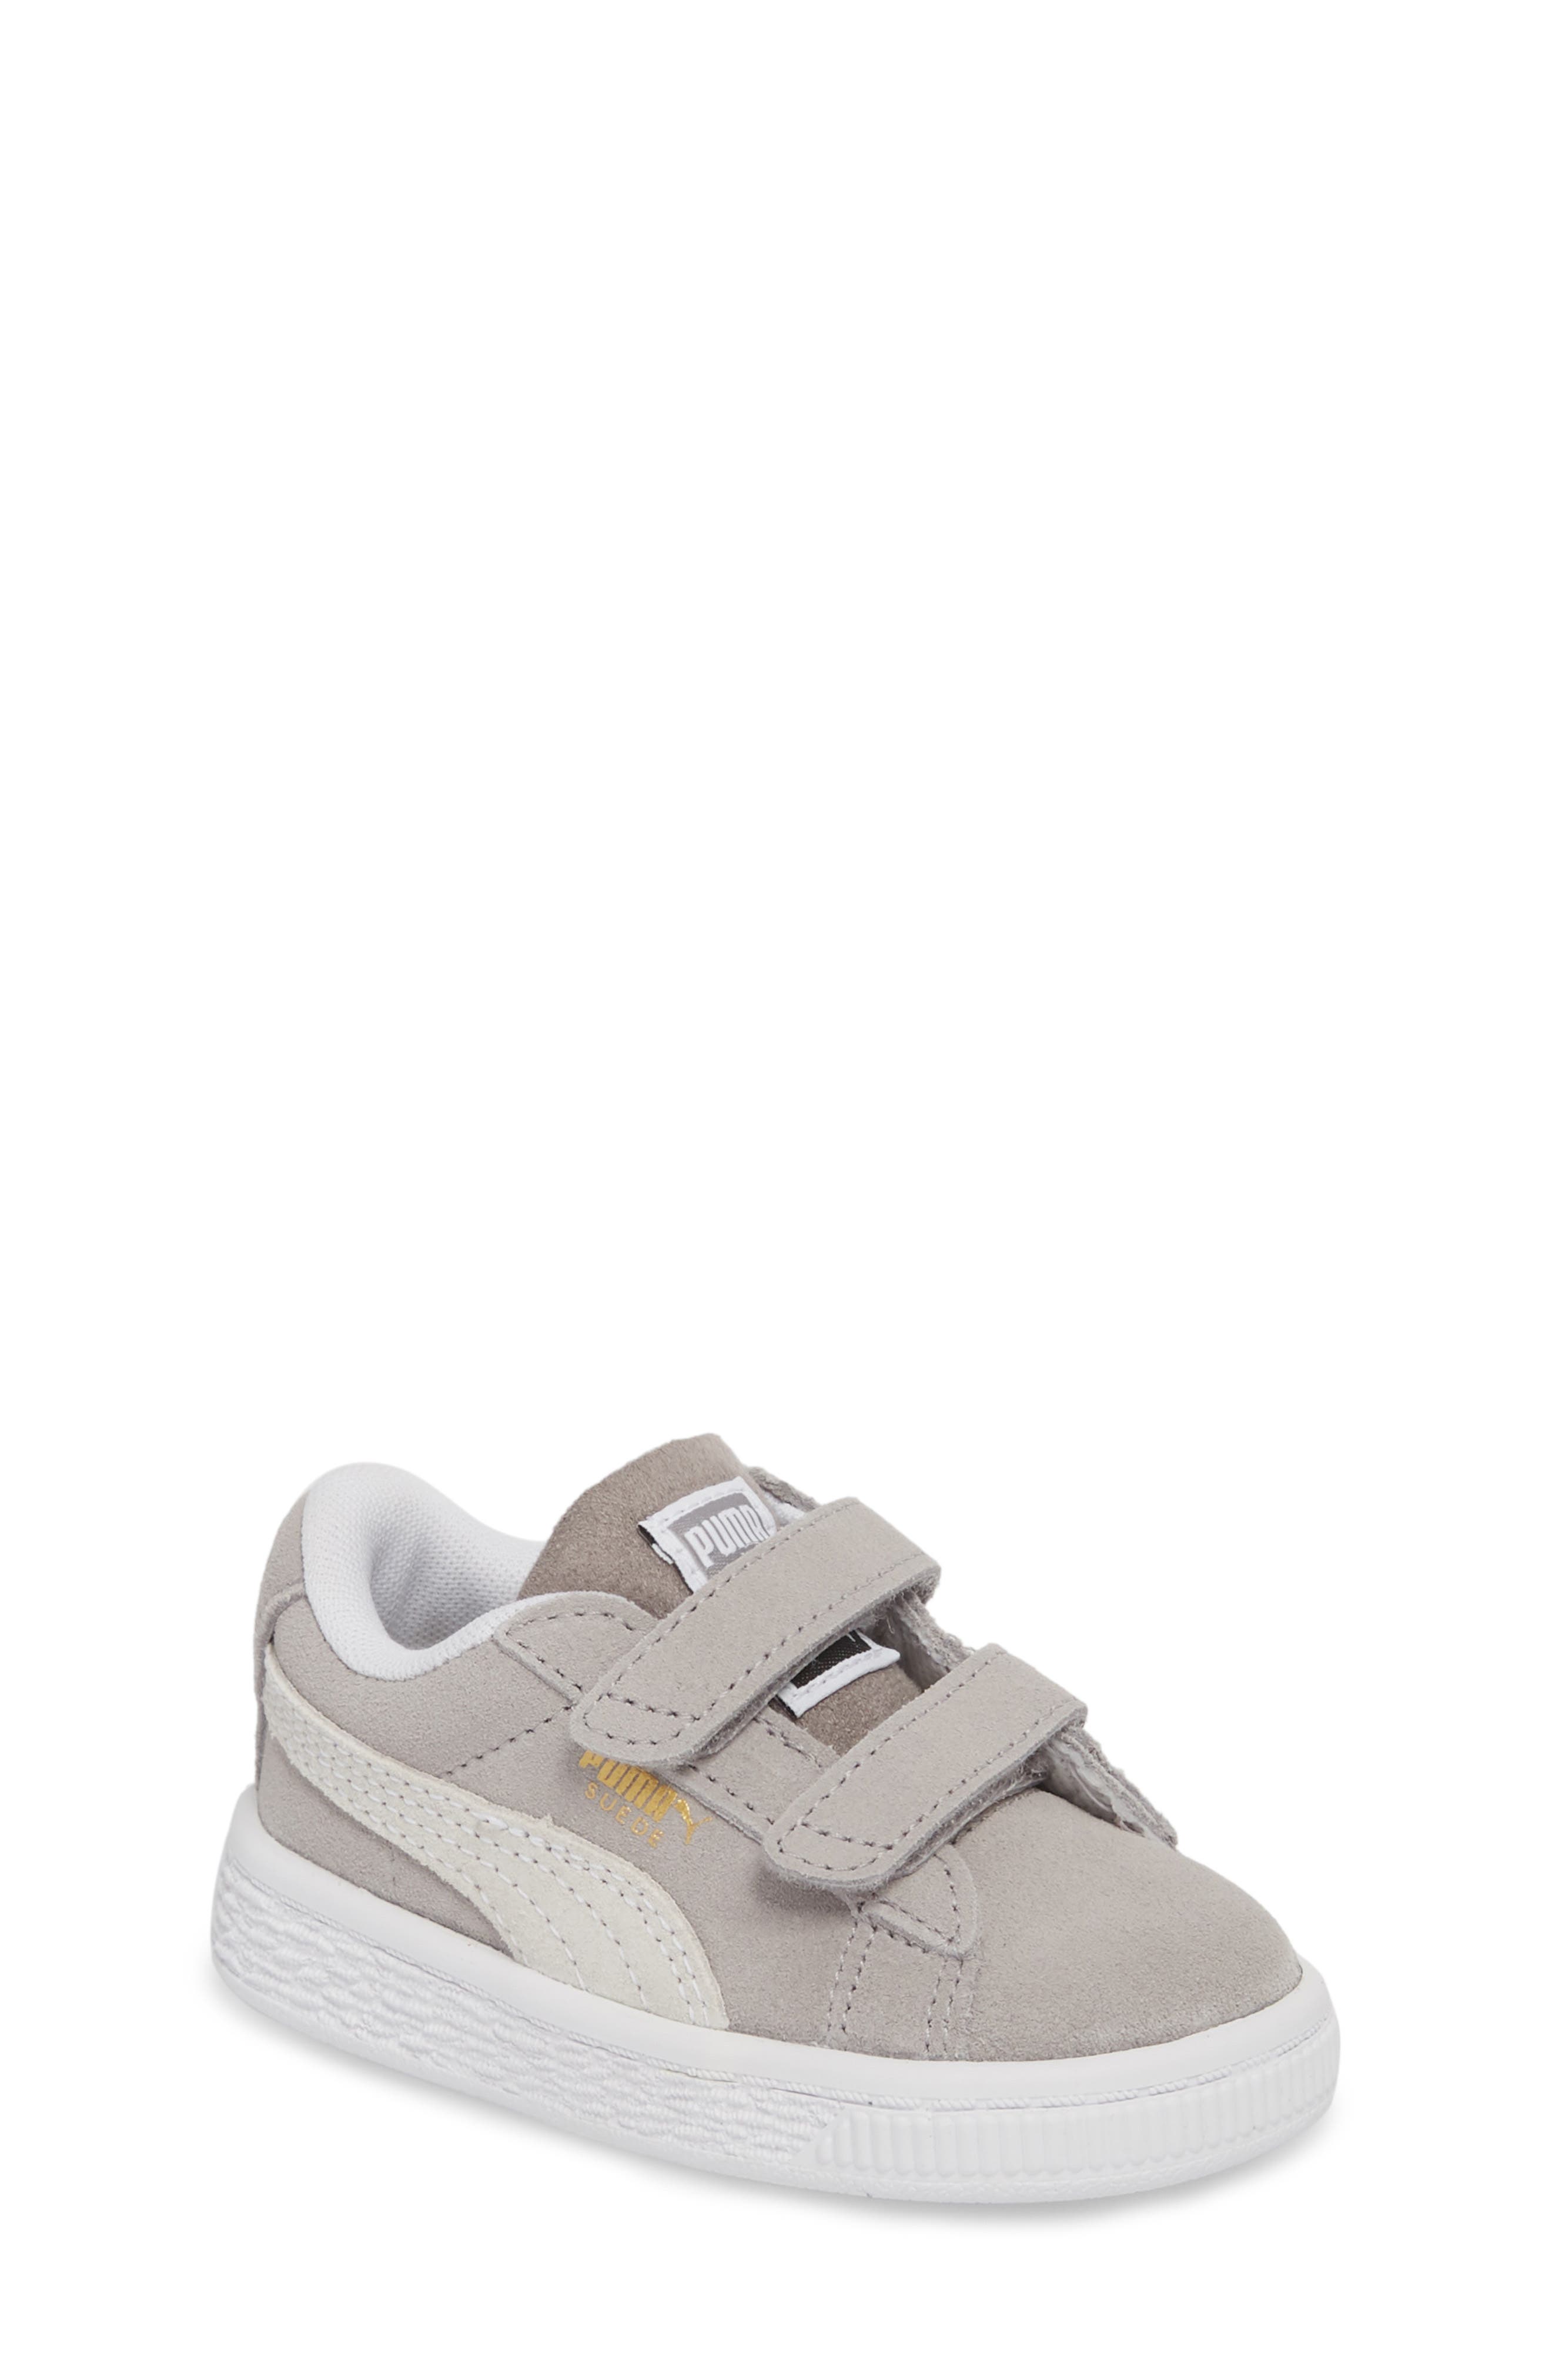 PUMA Suede Classic Sneaker (Baby 